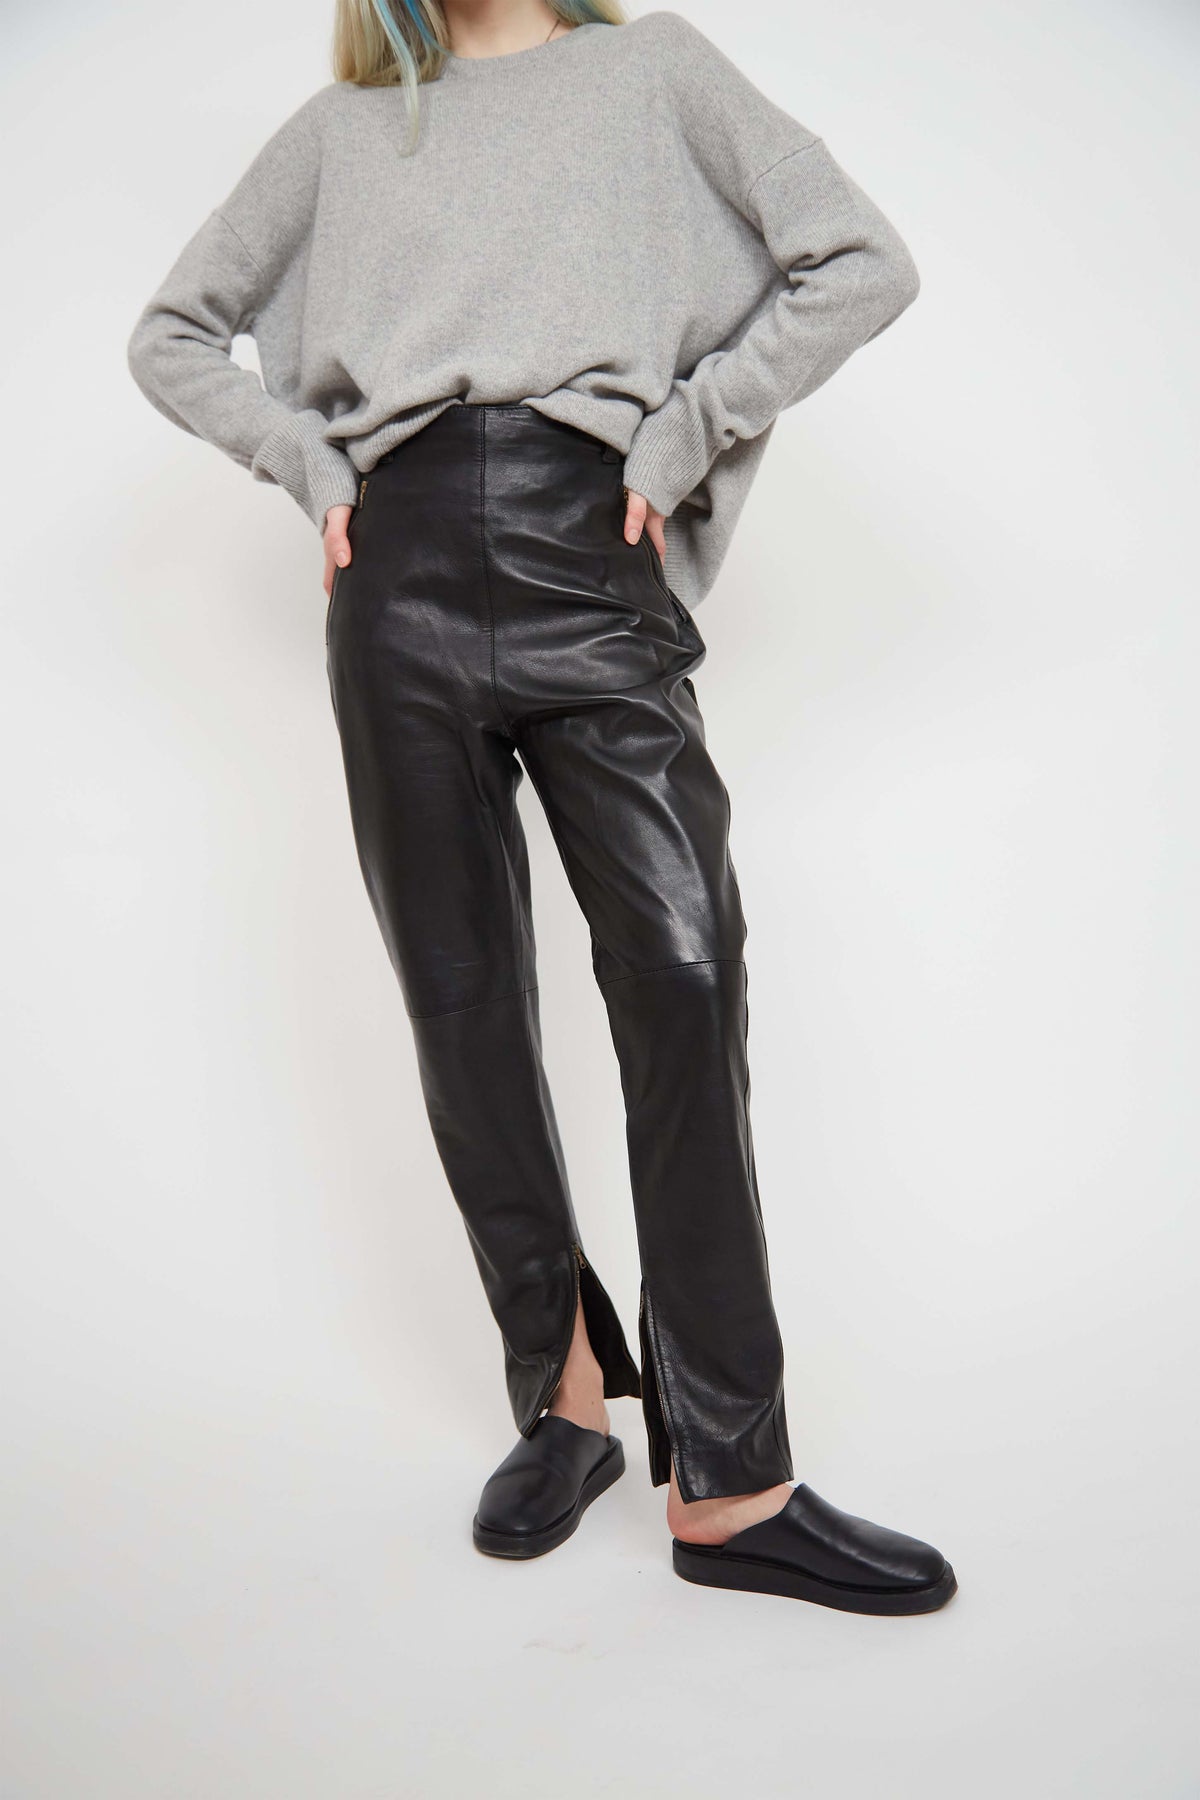 Gianfranco Ferre leather pants